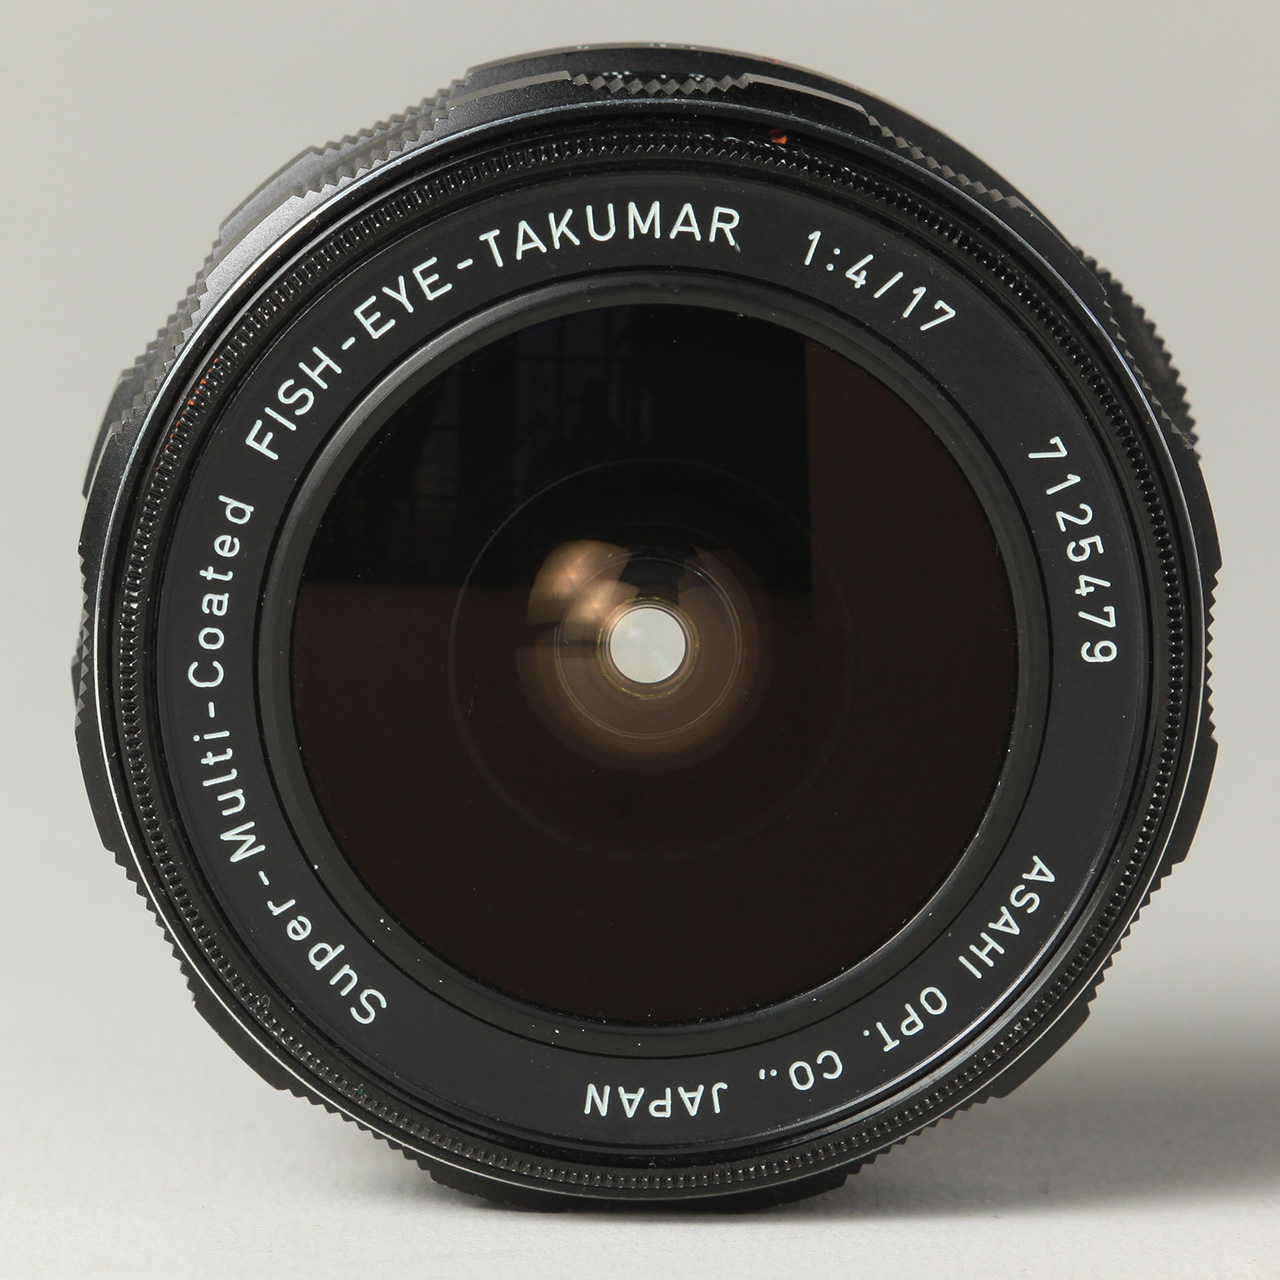 Super-Multi-Coated Fish-Eye Takumar 1:4.0/17mm (UV Filter Dialed In)